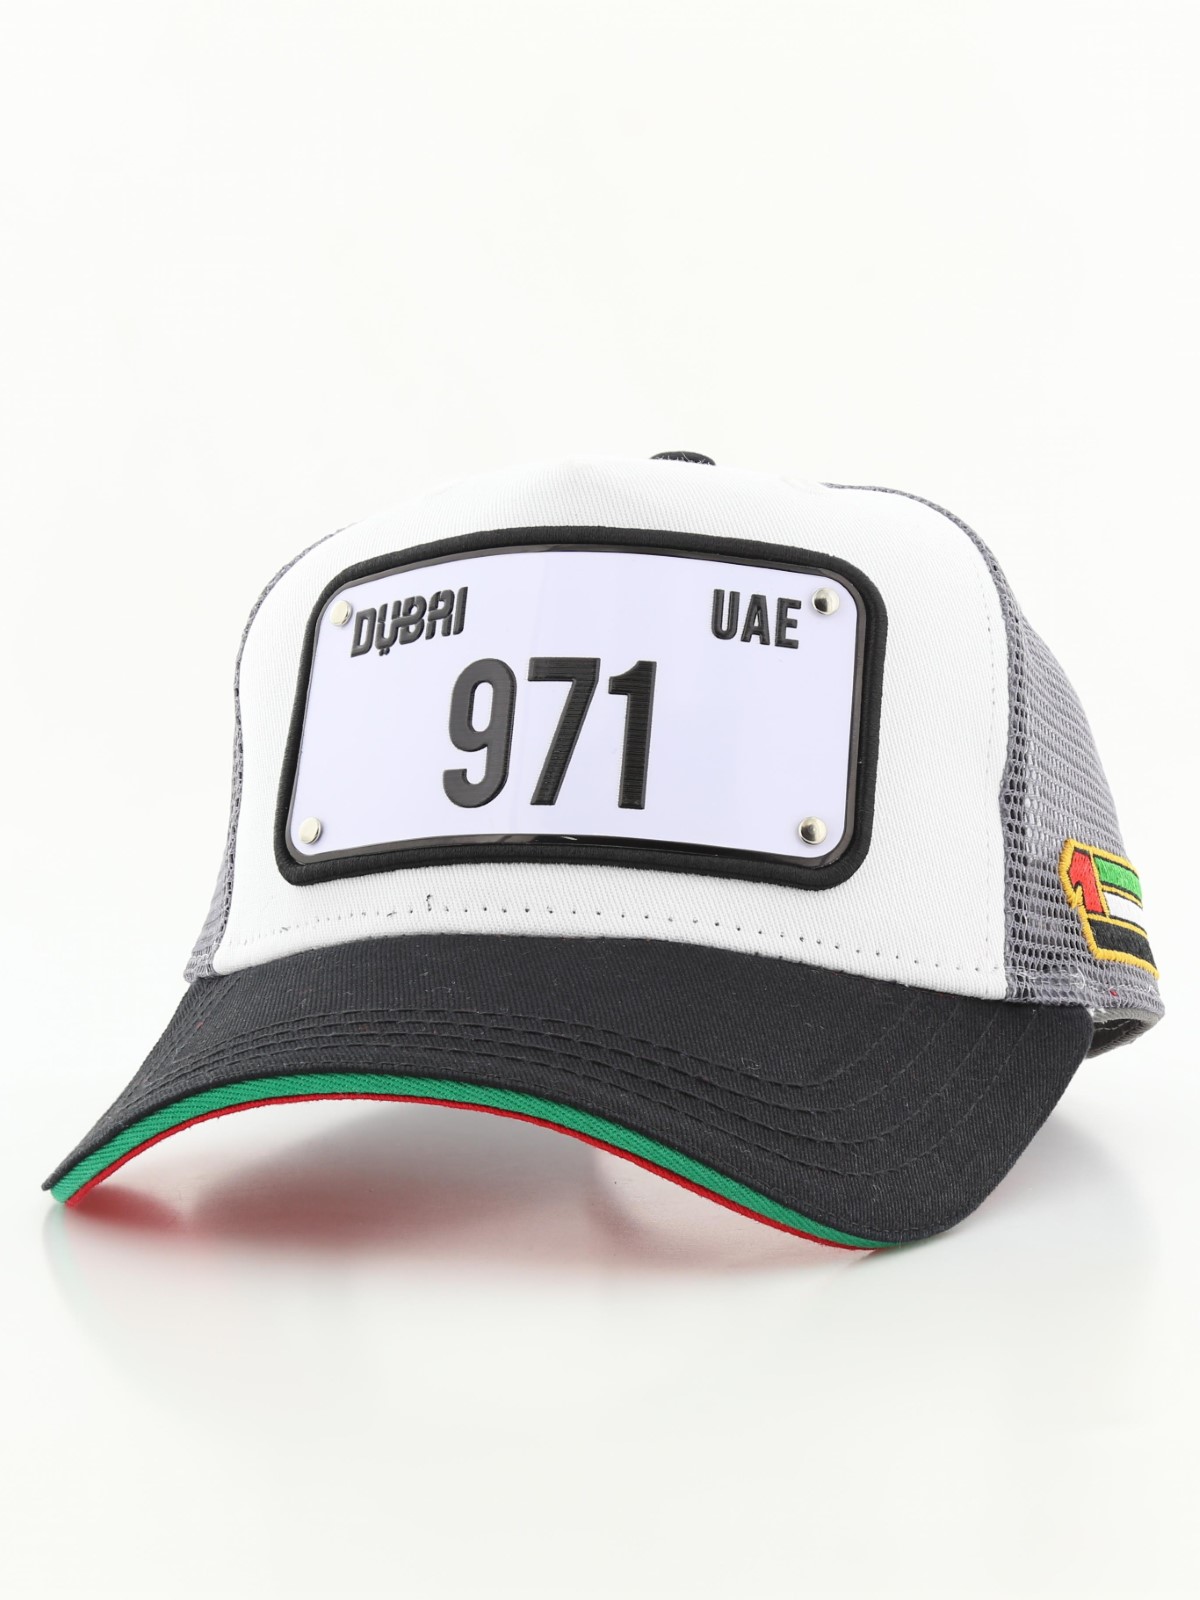 Raqam UAE New Dubai Plate No. 971 Model 1 Grey/Black/White Unisex Trucker Cap